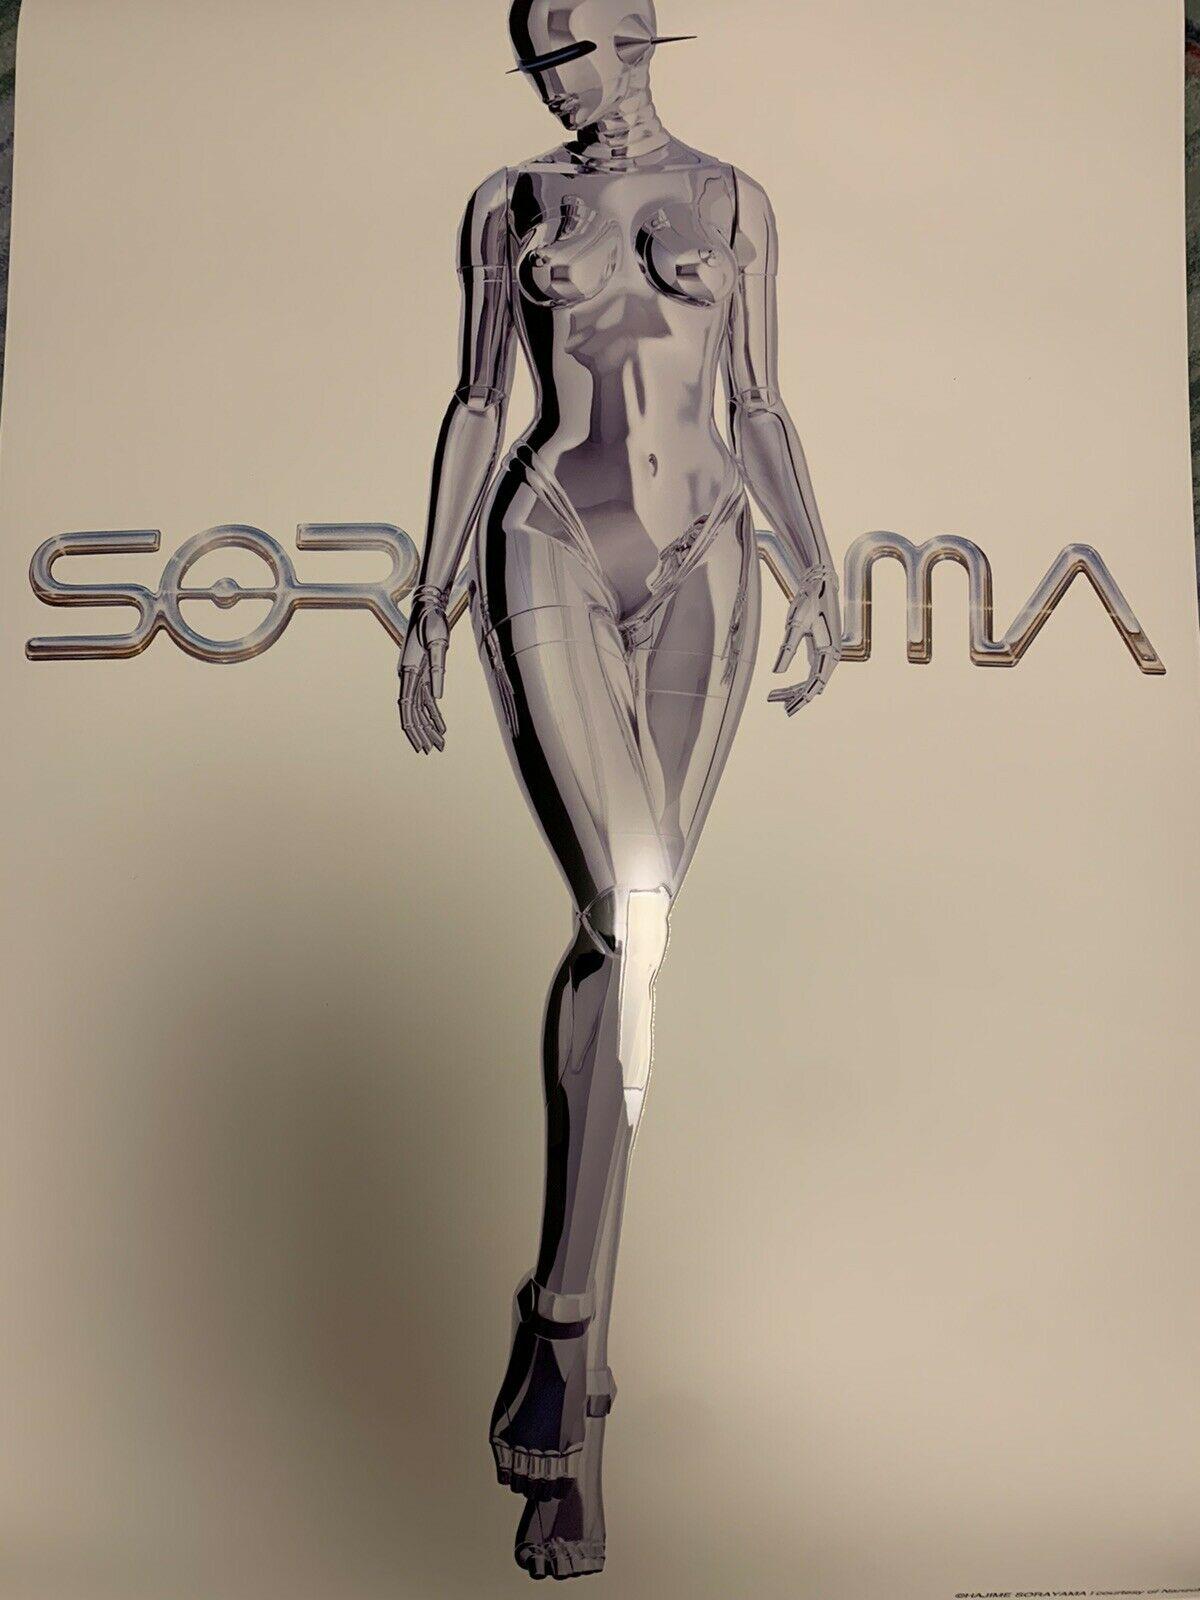 Official Exhibition 2G Sexy Robot Lithograph - Print by  Hajime Sorayama